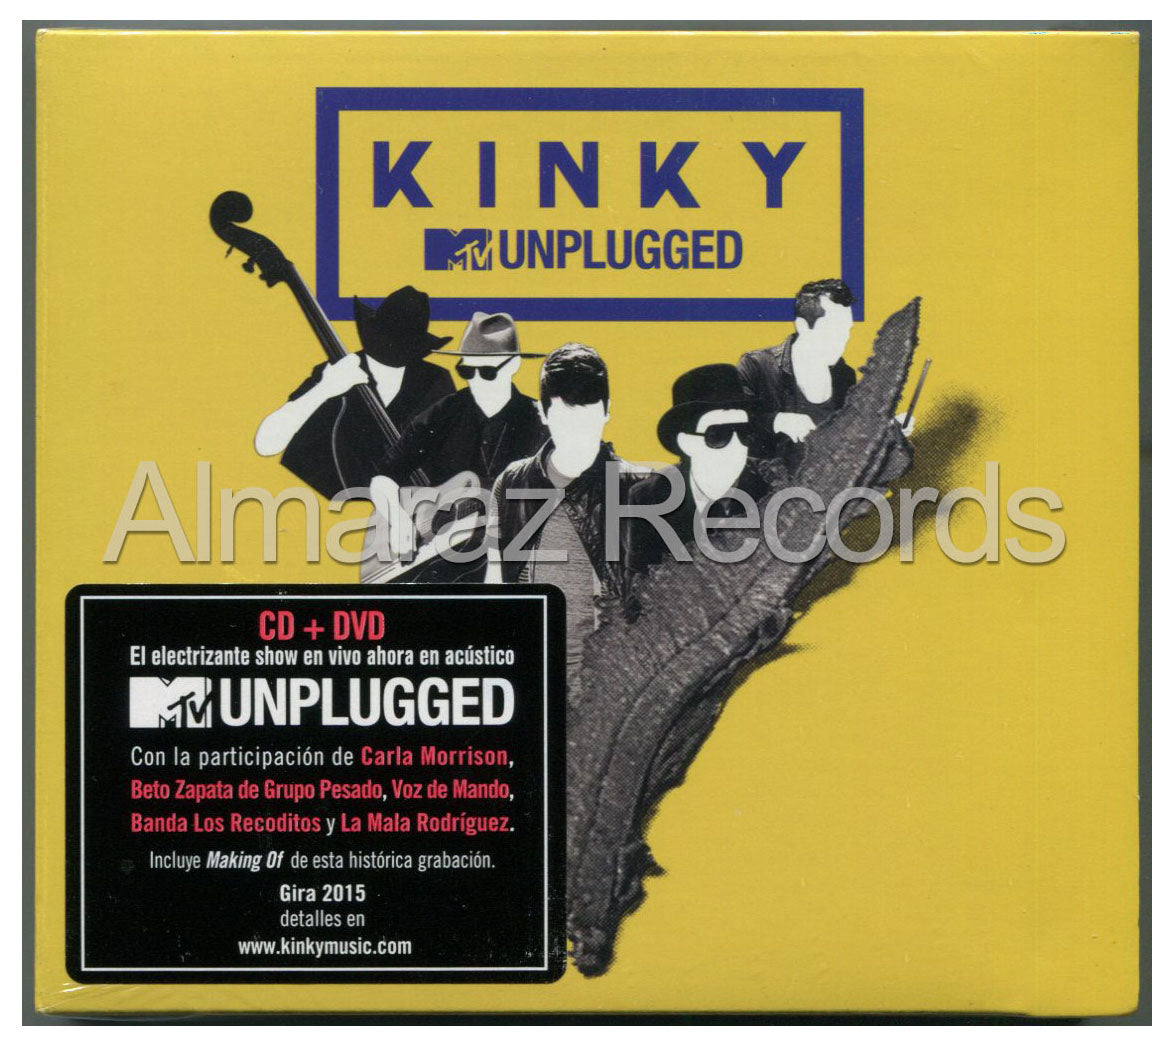 Kinky MTV Unplugged CD+DVD